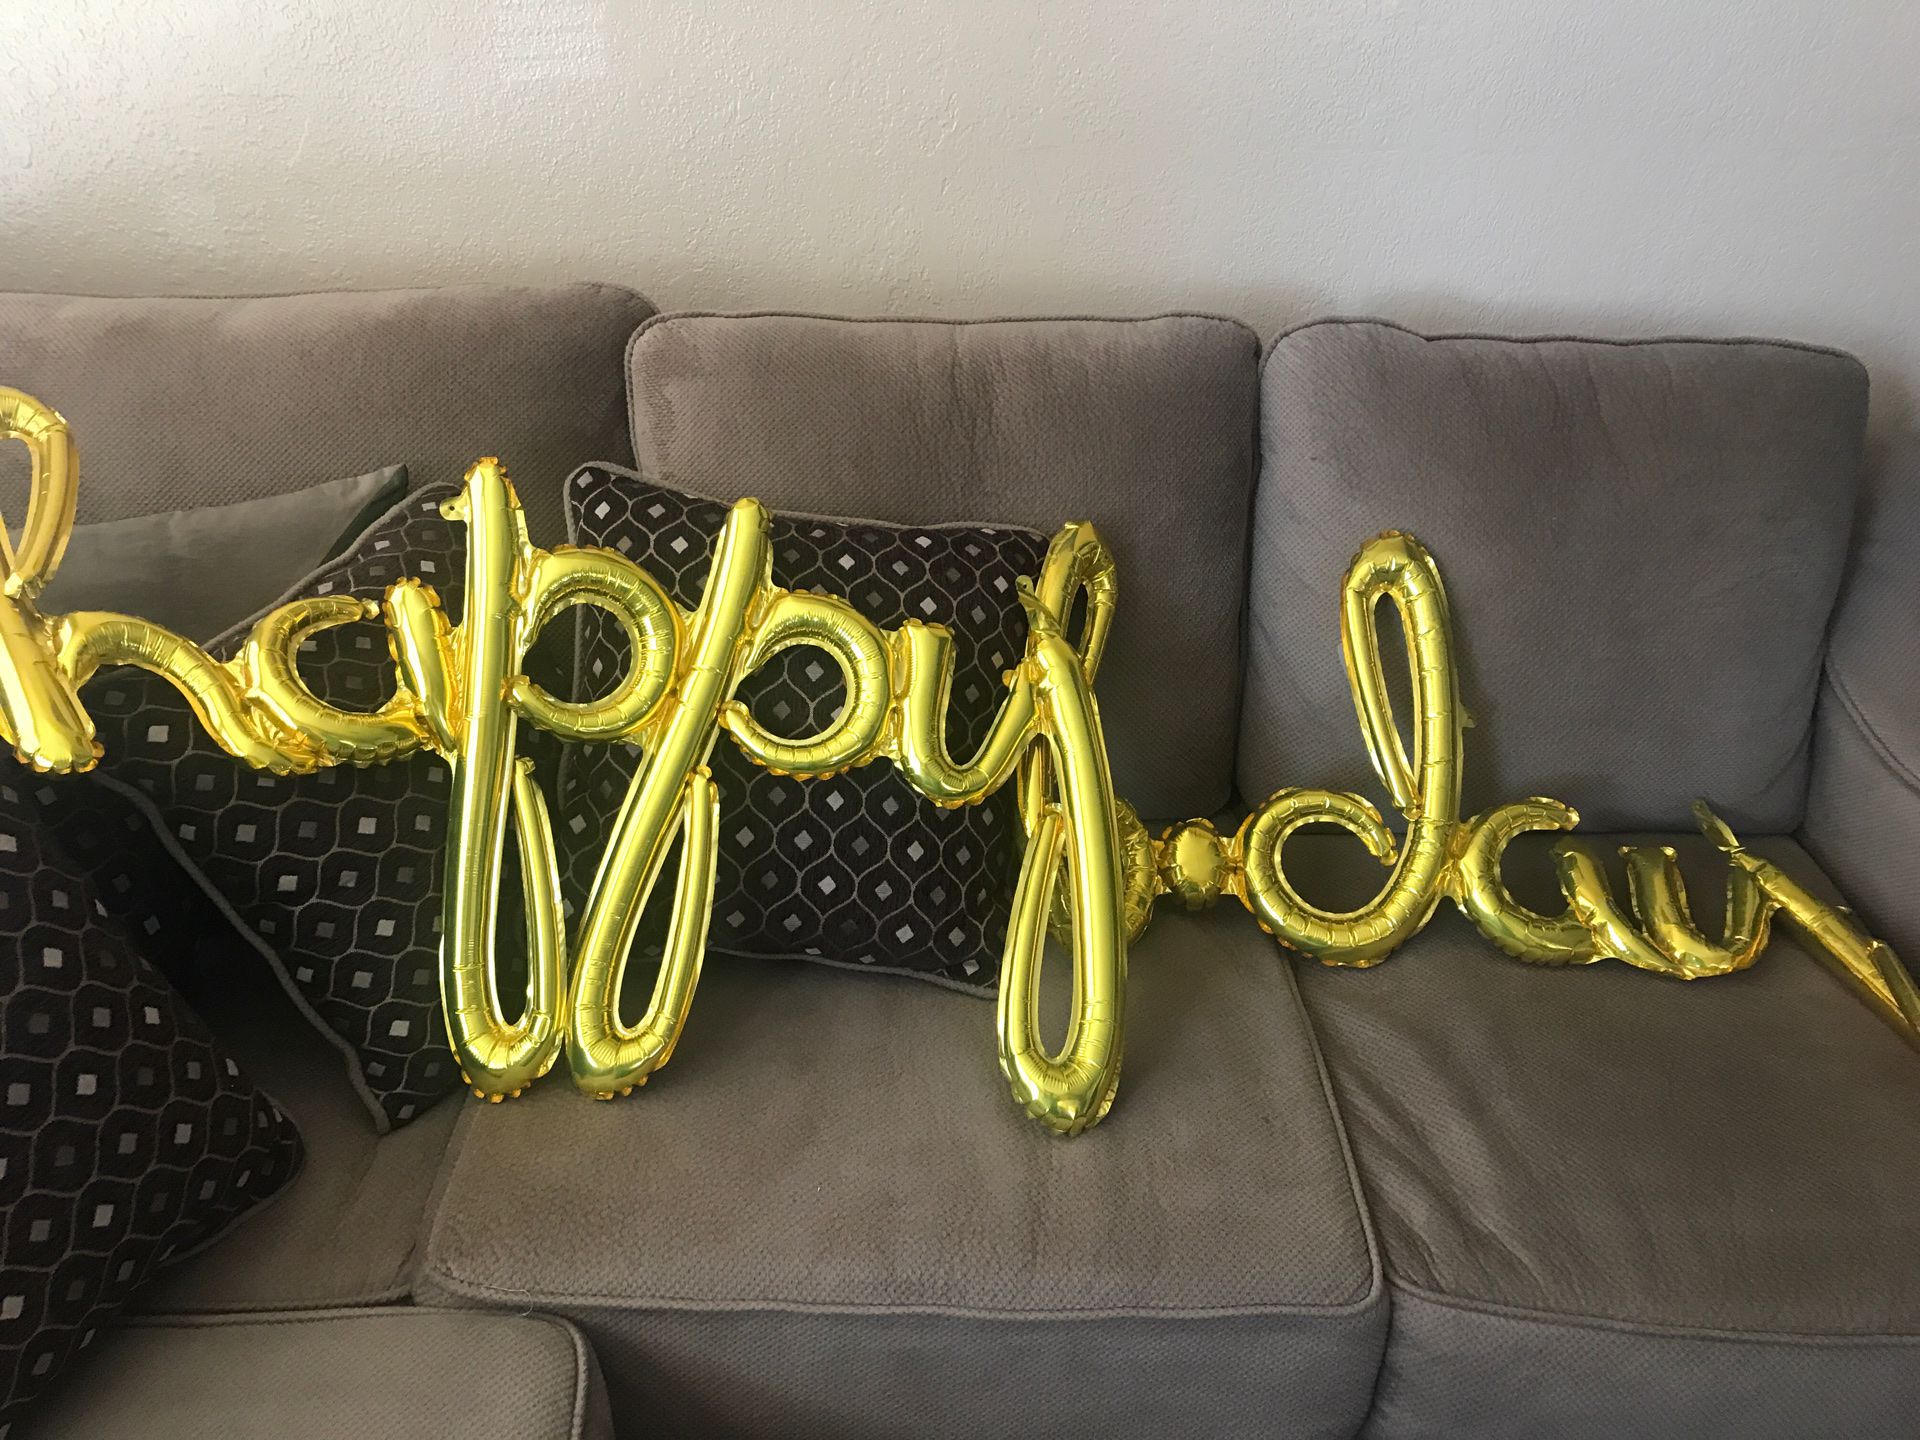 Free Happy Birthday Balloons from last Saturday. Still good